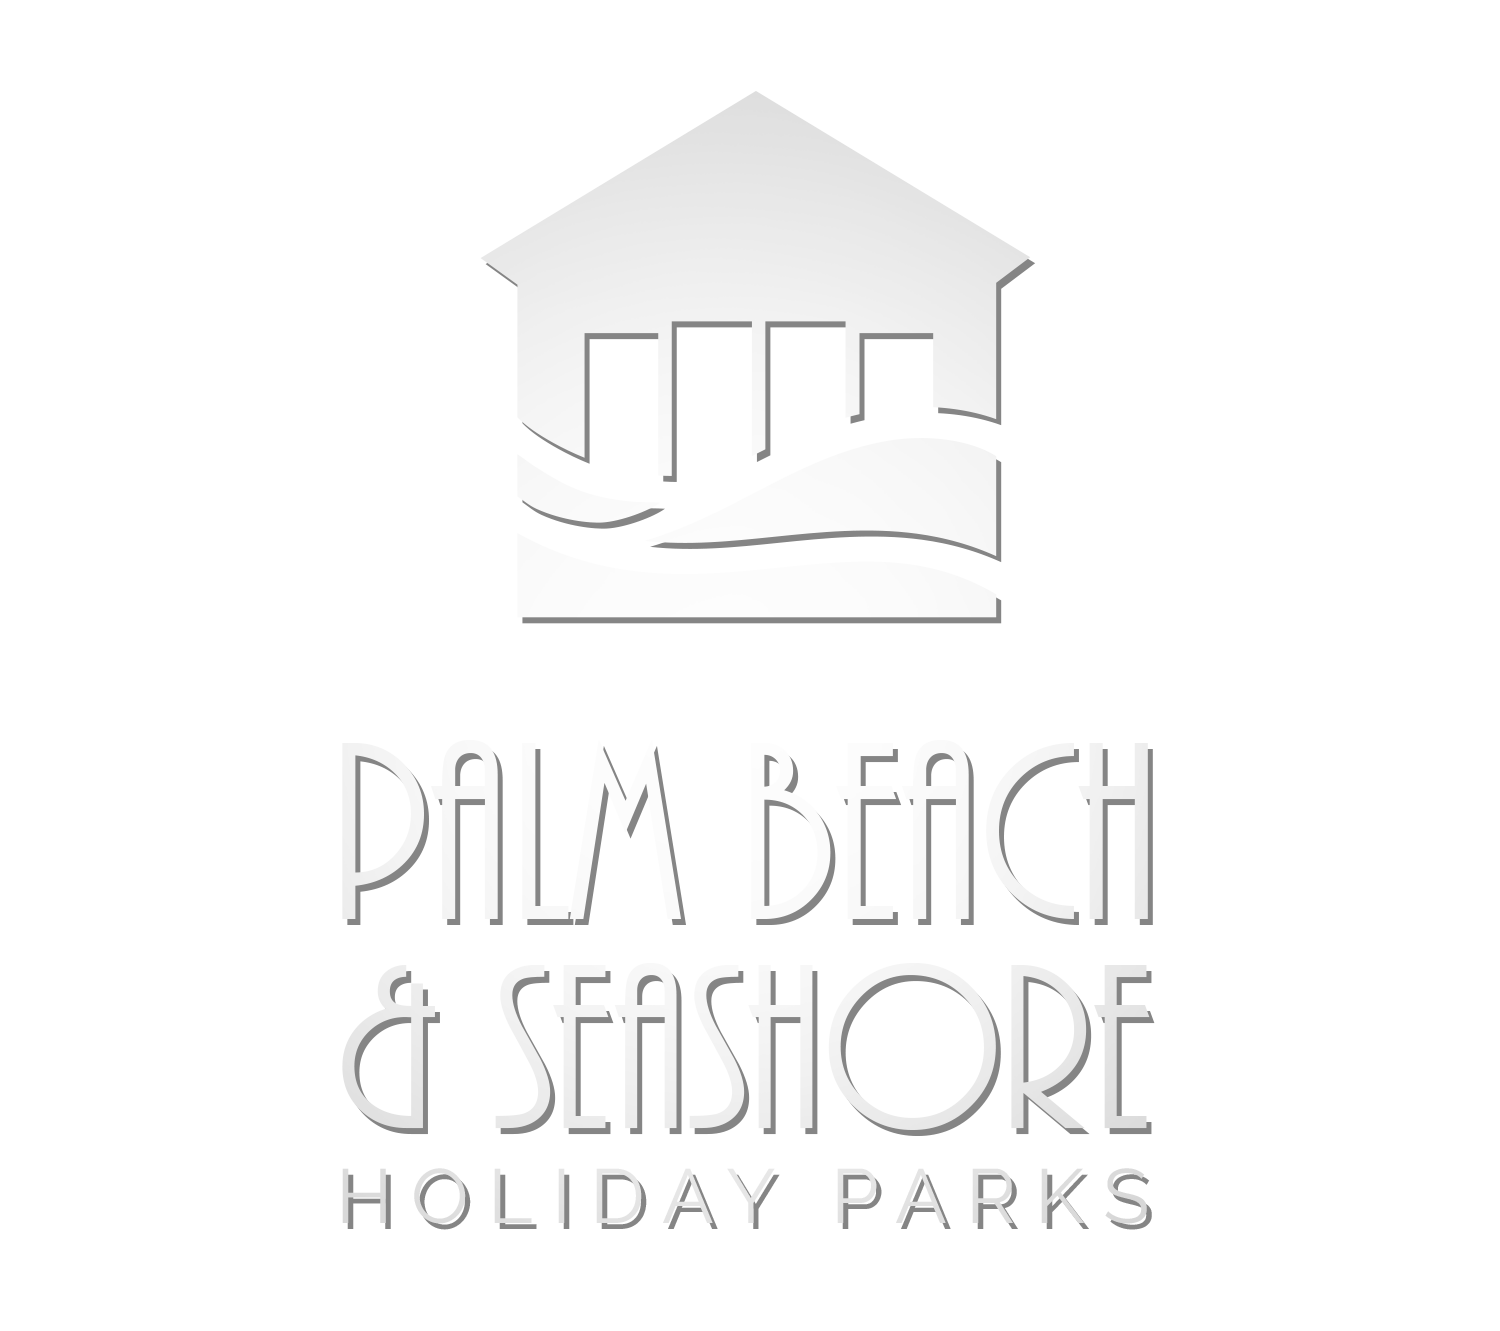 Palm Beach & Seashore Holiday Parks